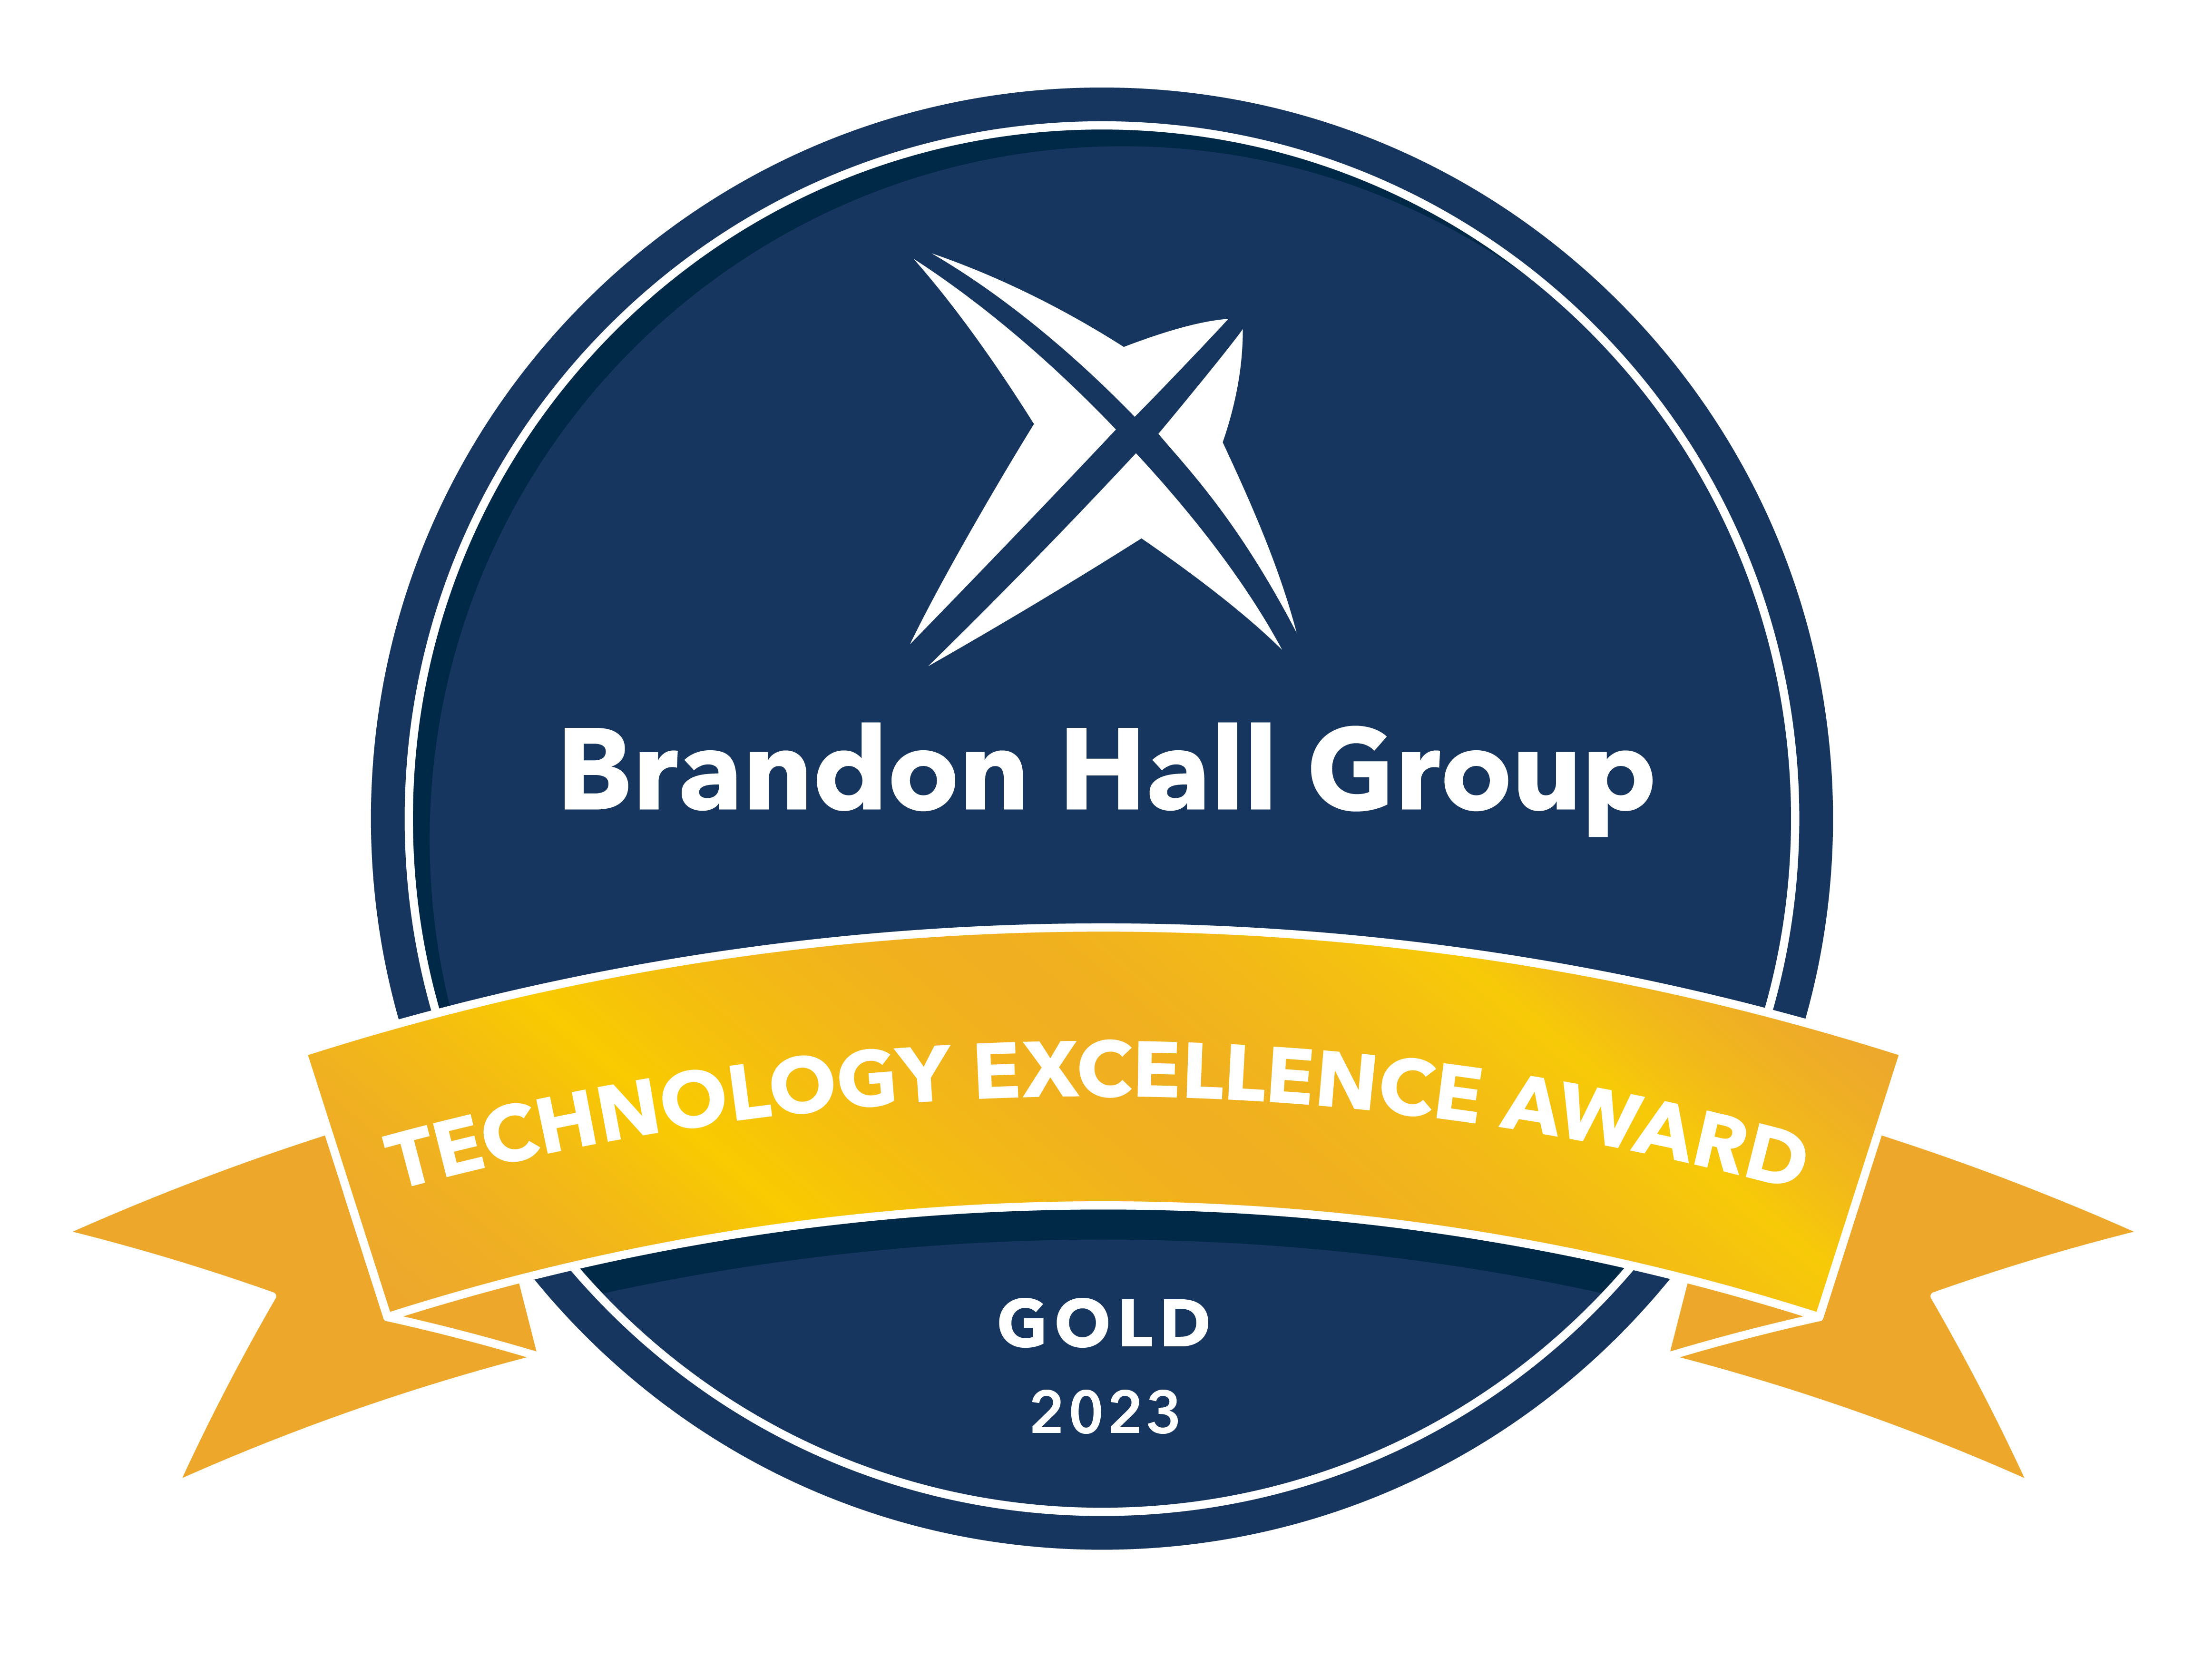 Brandon Hall Group Technology Excellence Award Gold 2023